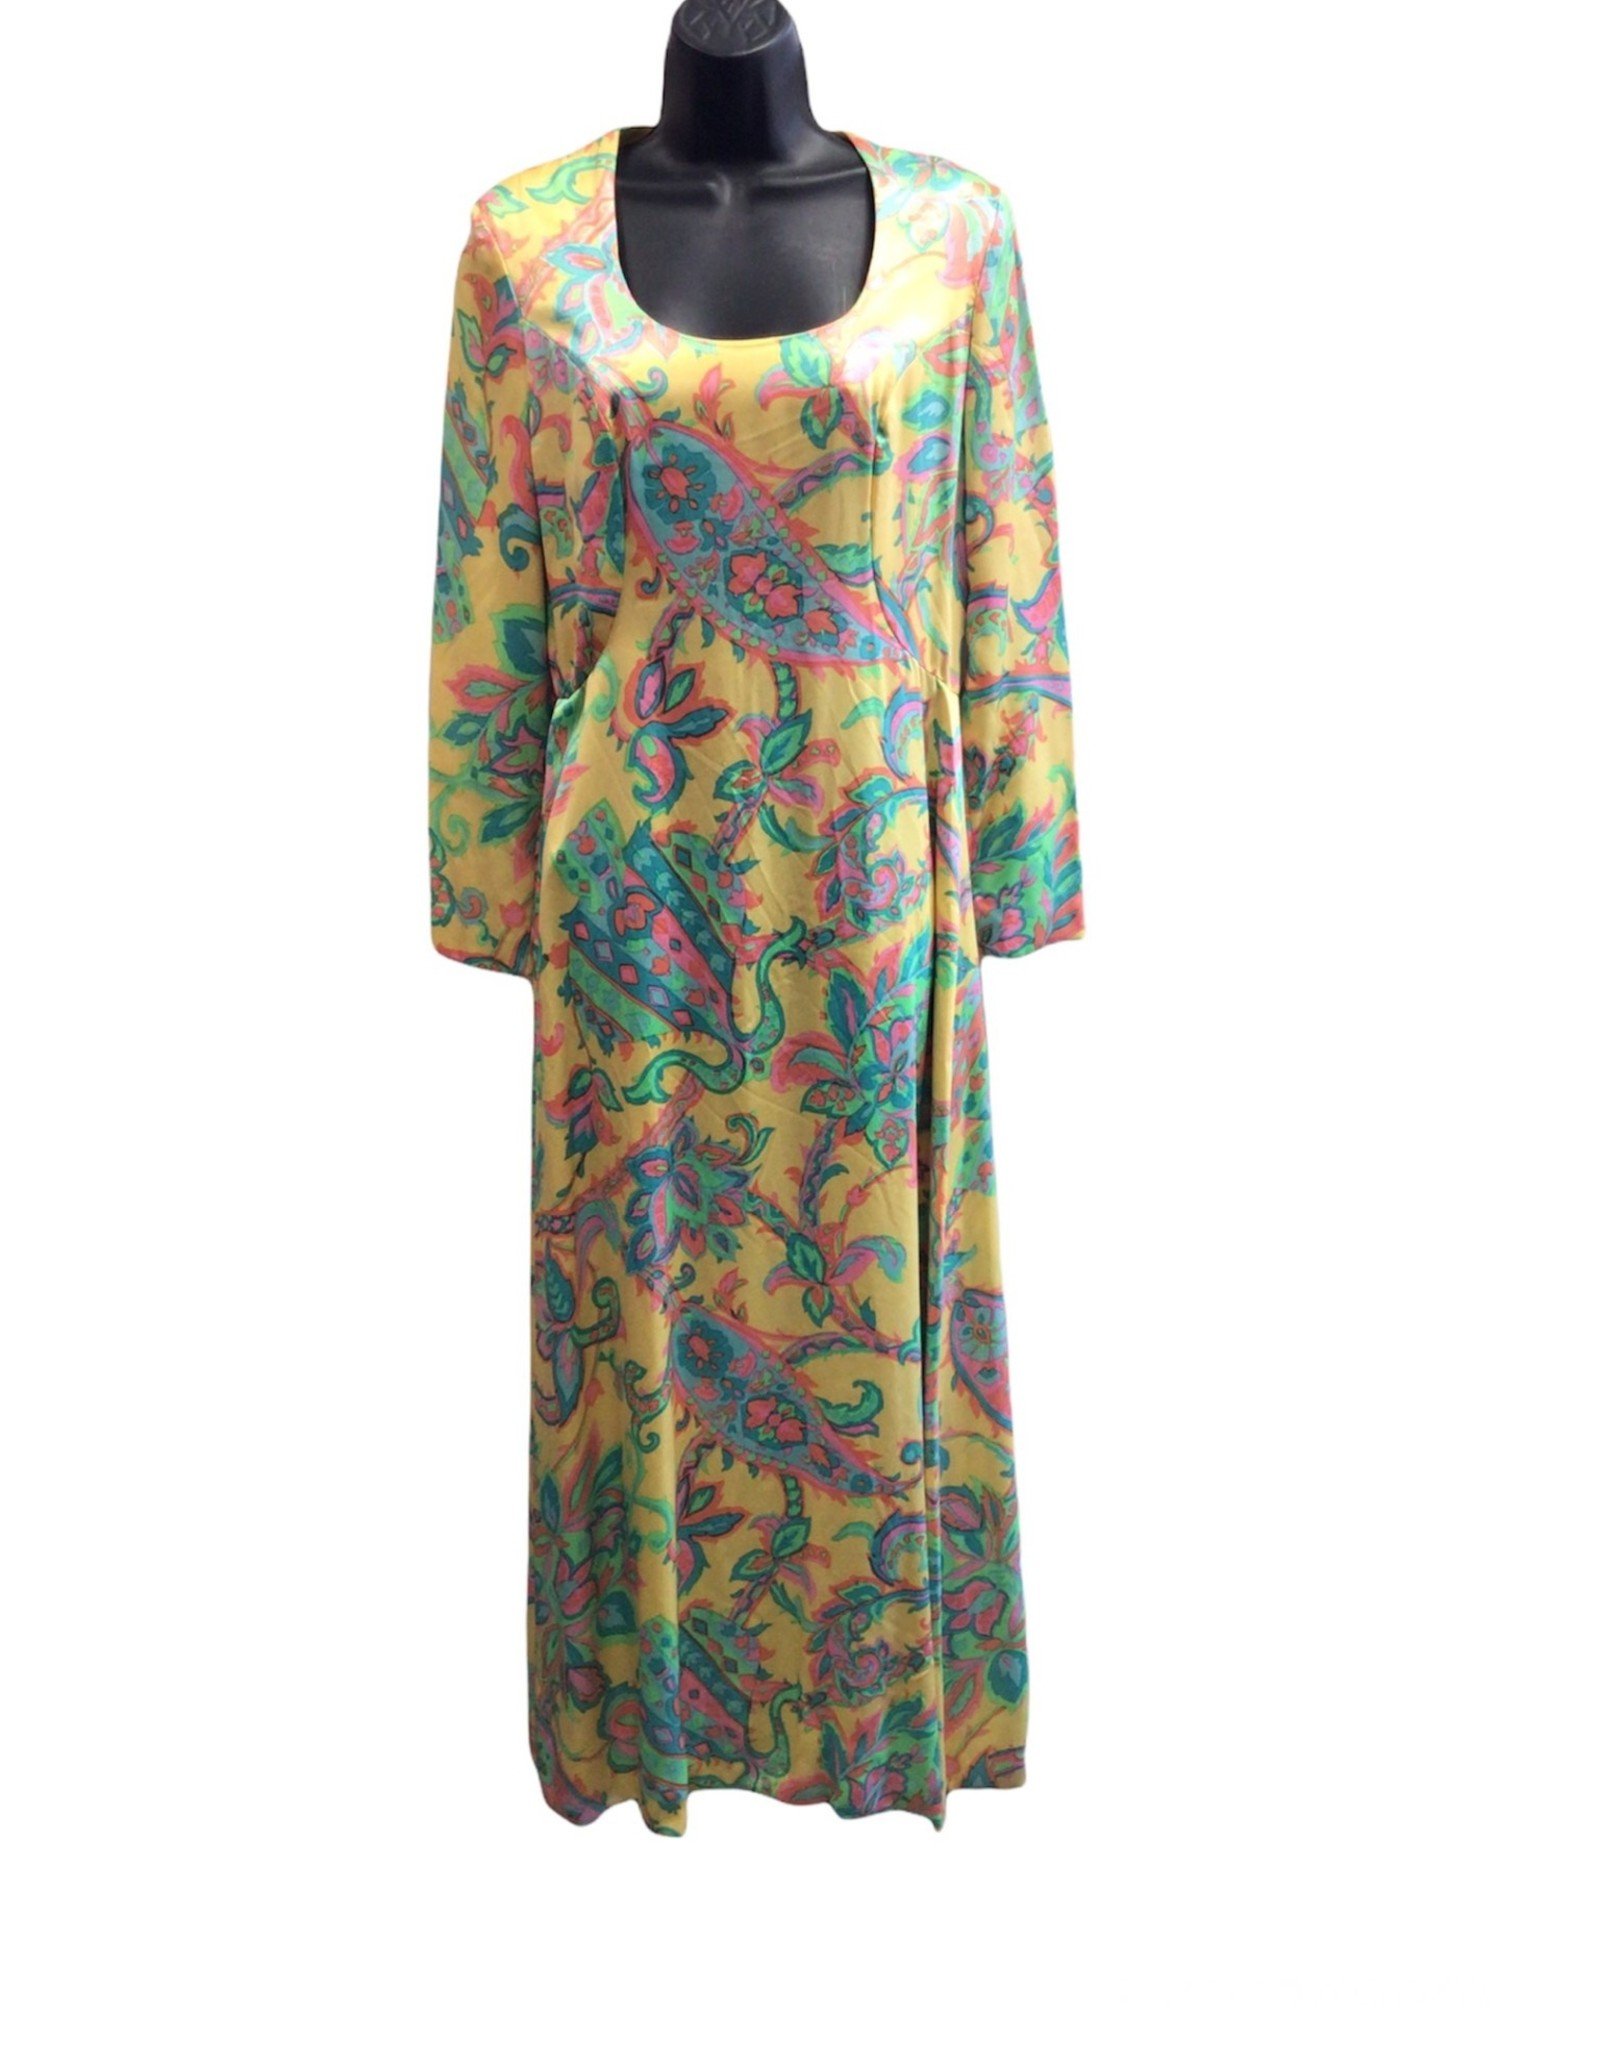 Montaldo's 70s Yellow w/paisley details full length dress